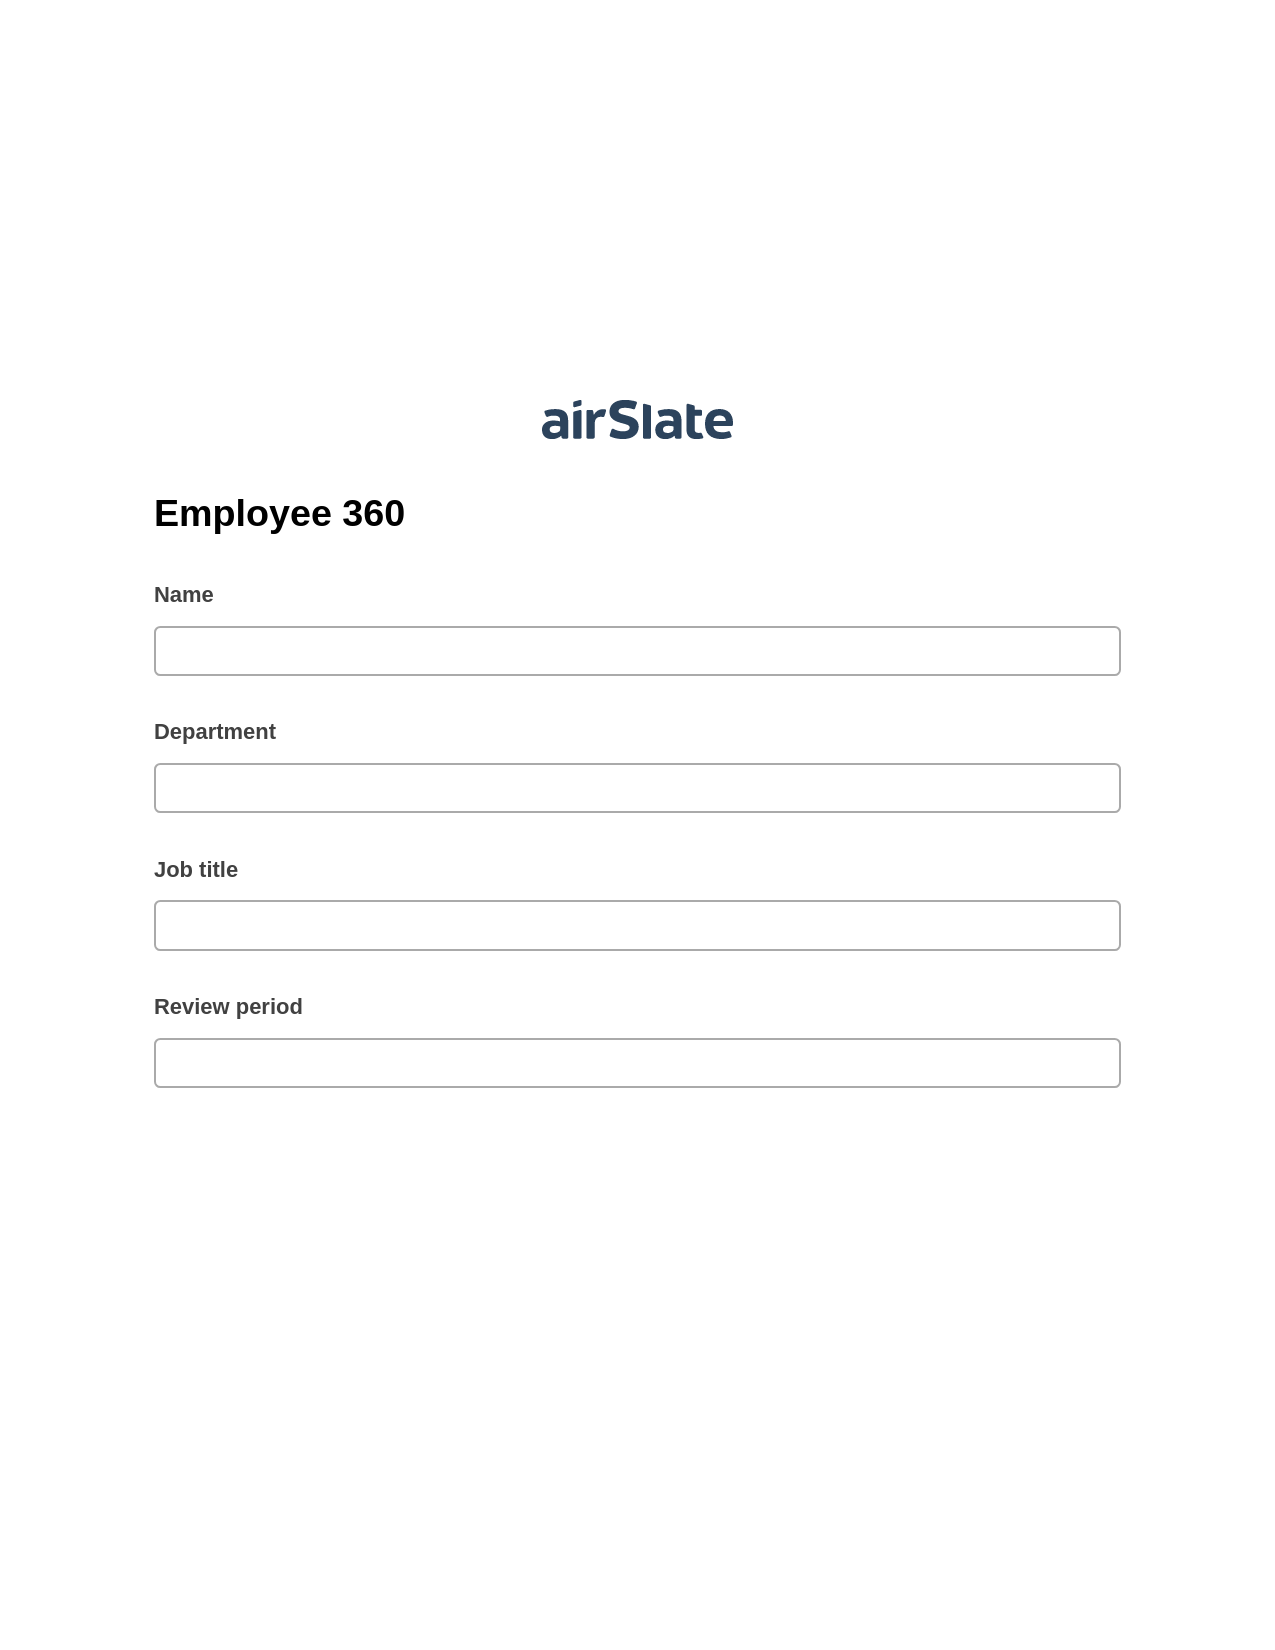 Multirole Employee 360 Pre-fill from Salesforce Records with SOQL Bot, Google Calendar Bot, Slack Notification Postfinish Bot